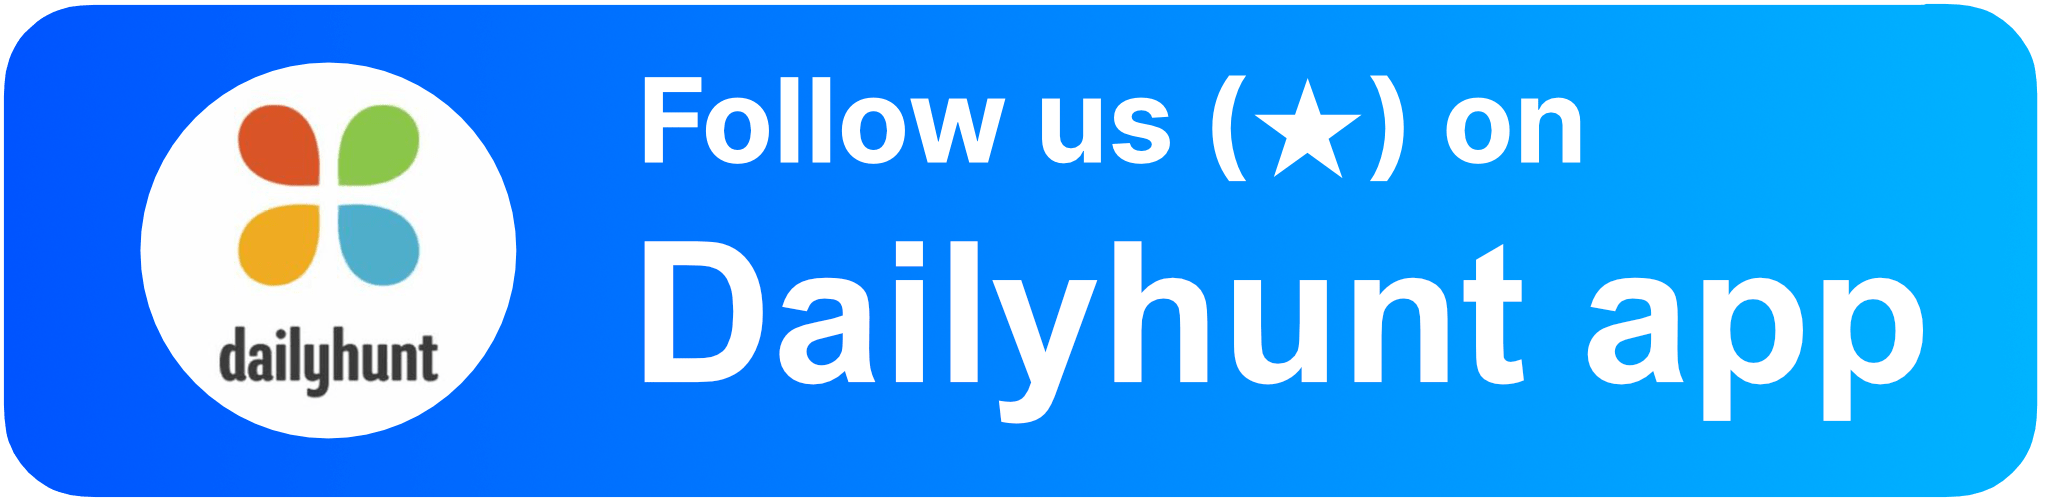 Daily Hunt Logo Follow